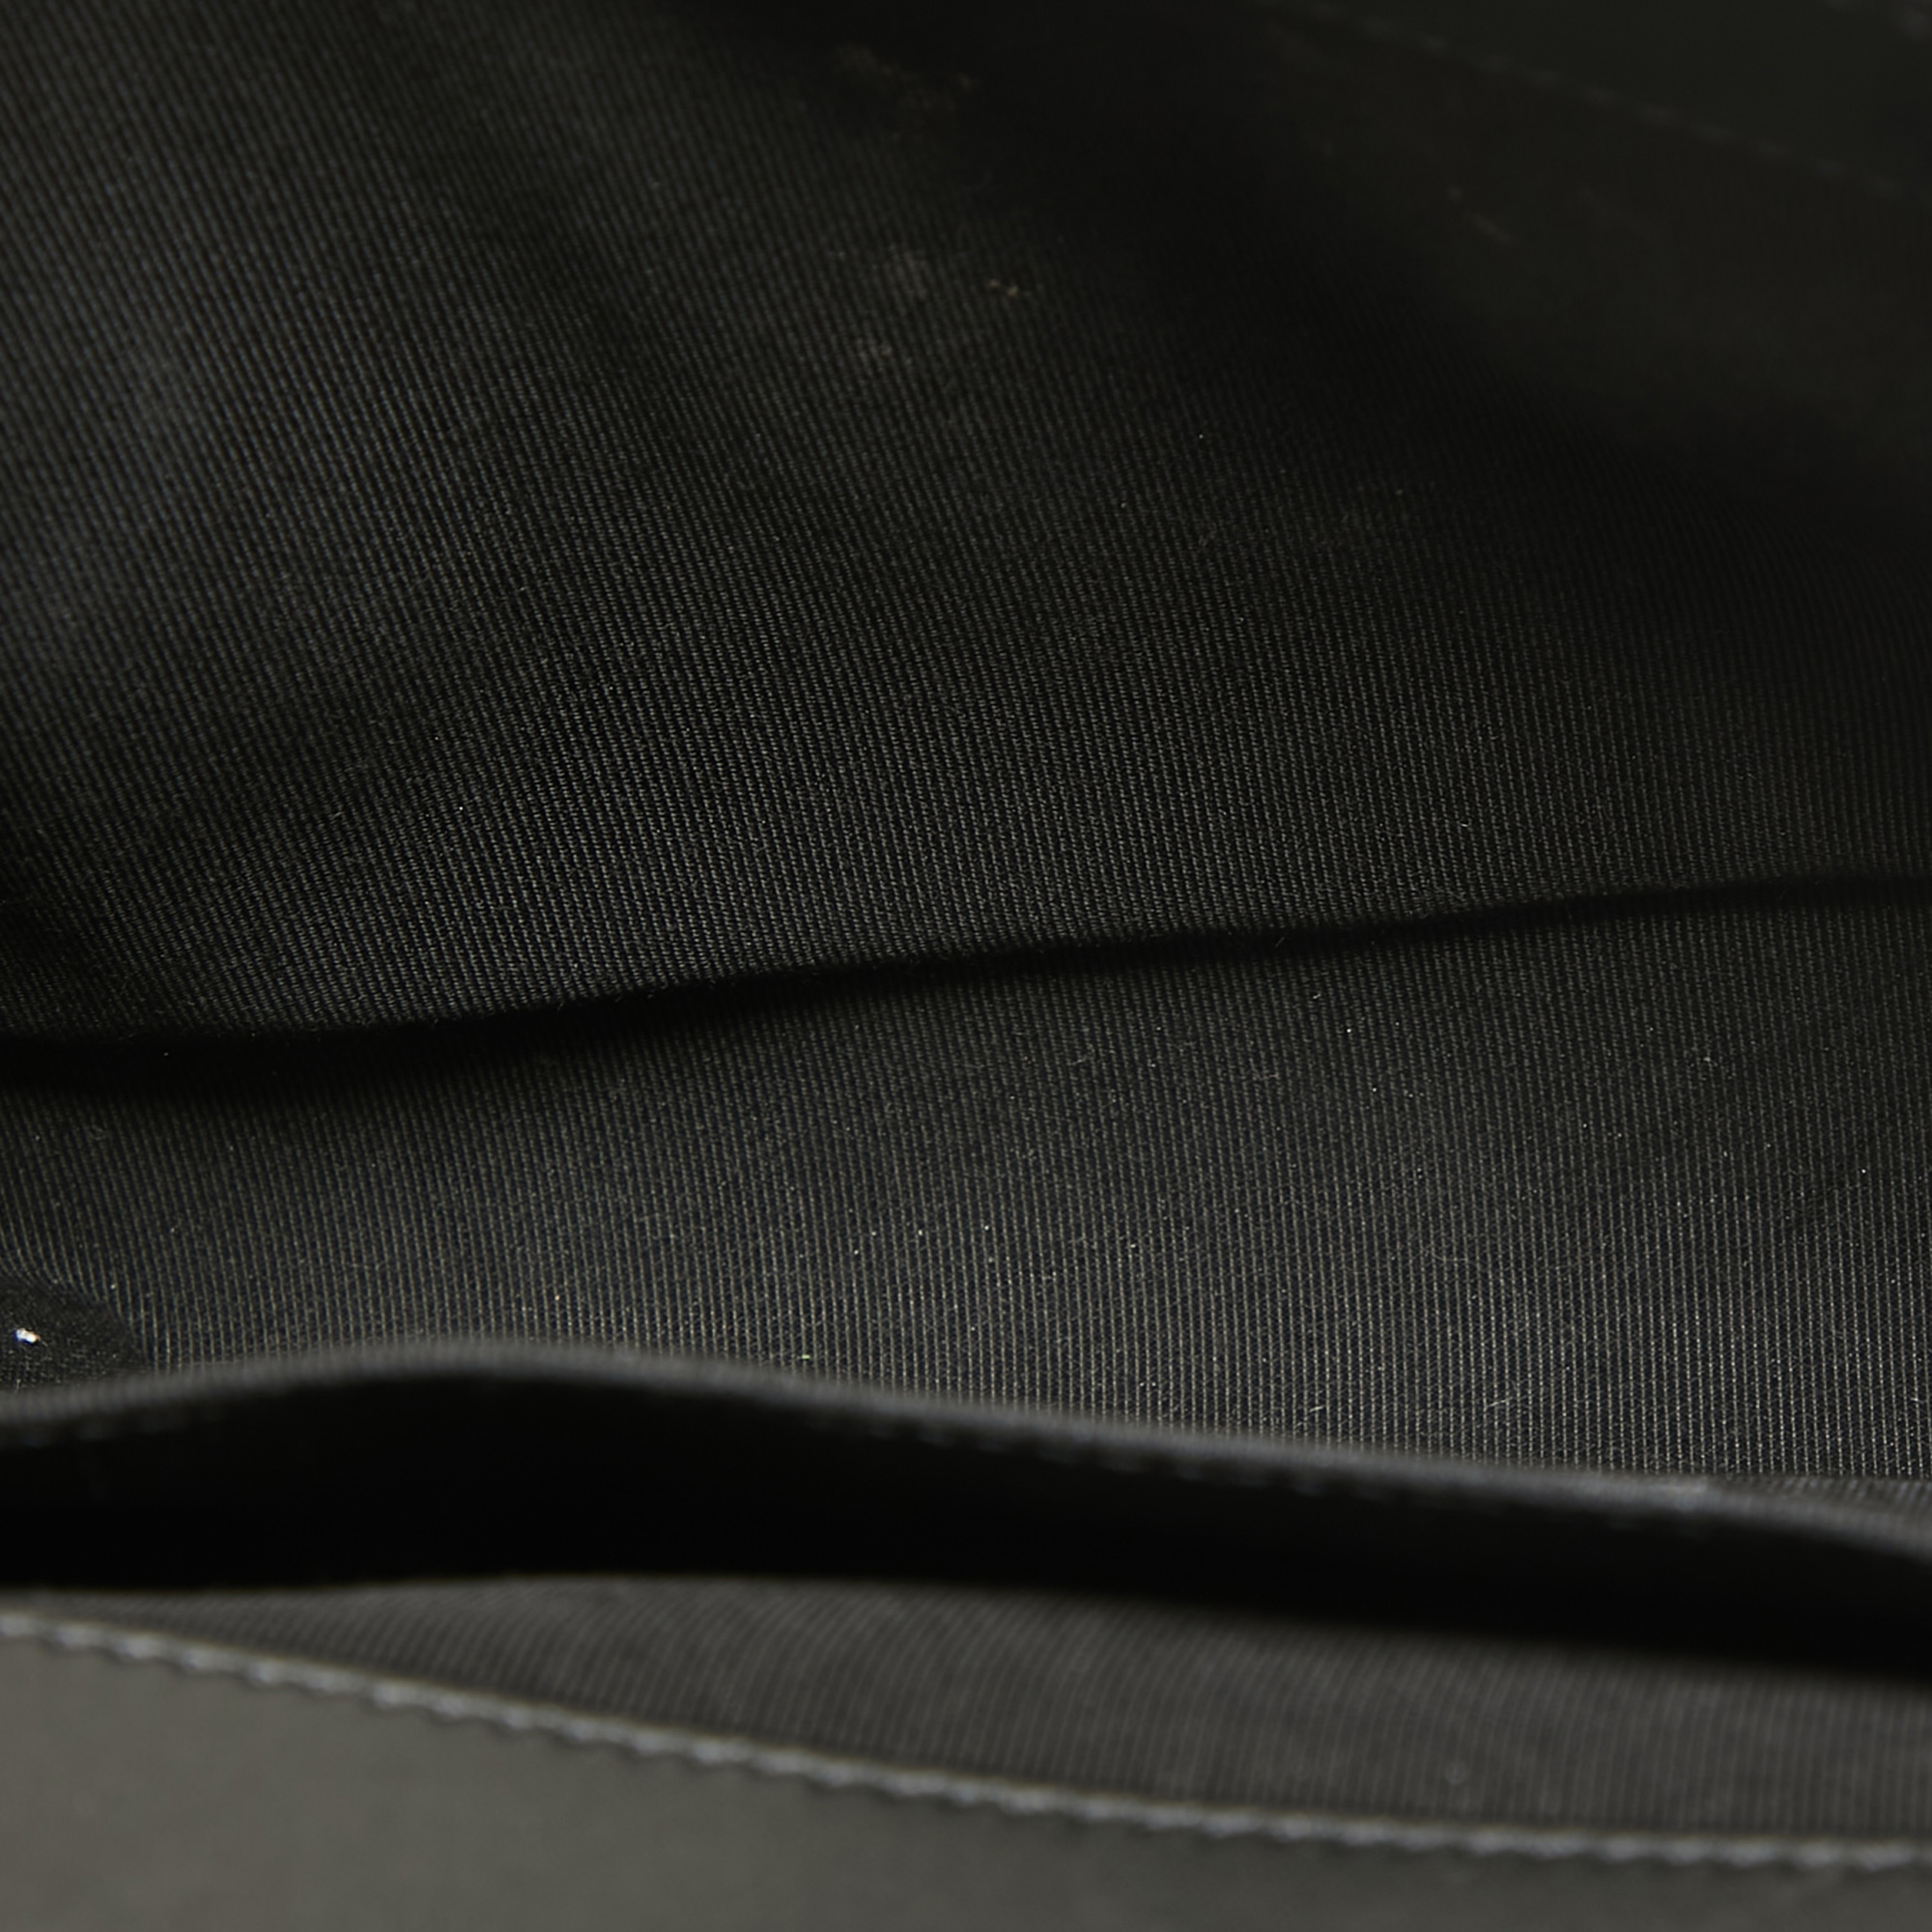 Chanel Black/Holographic Chevron Leather Medium Boy Flap Bag